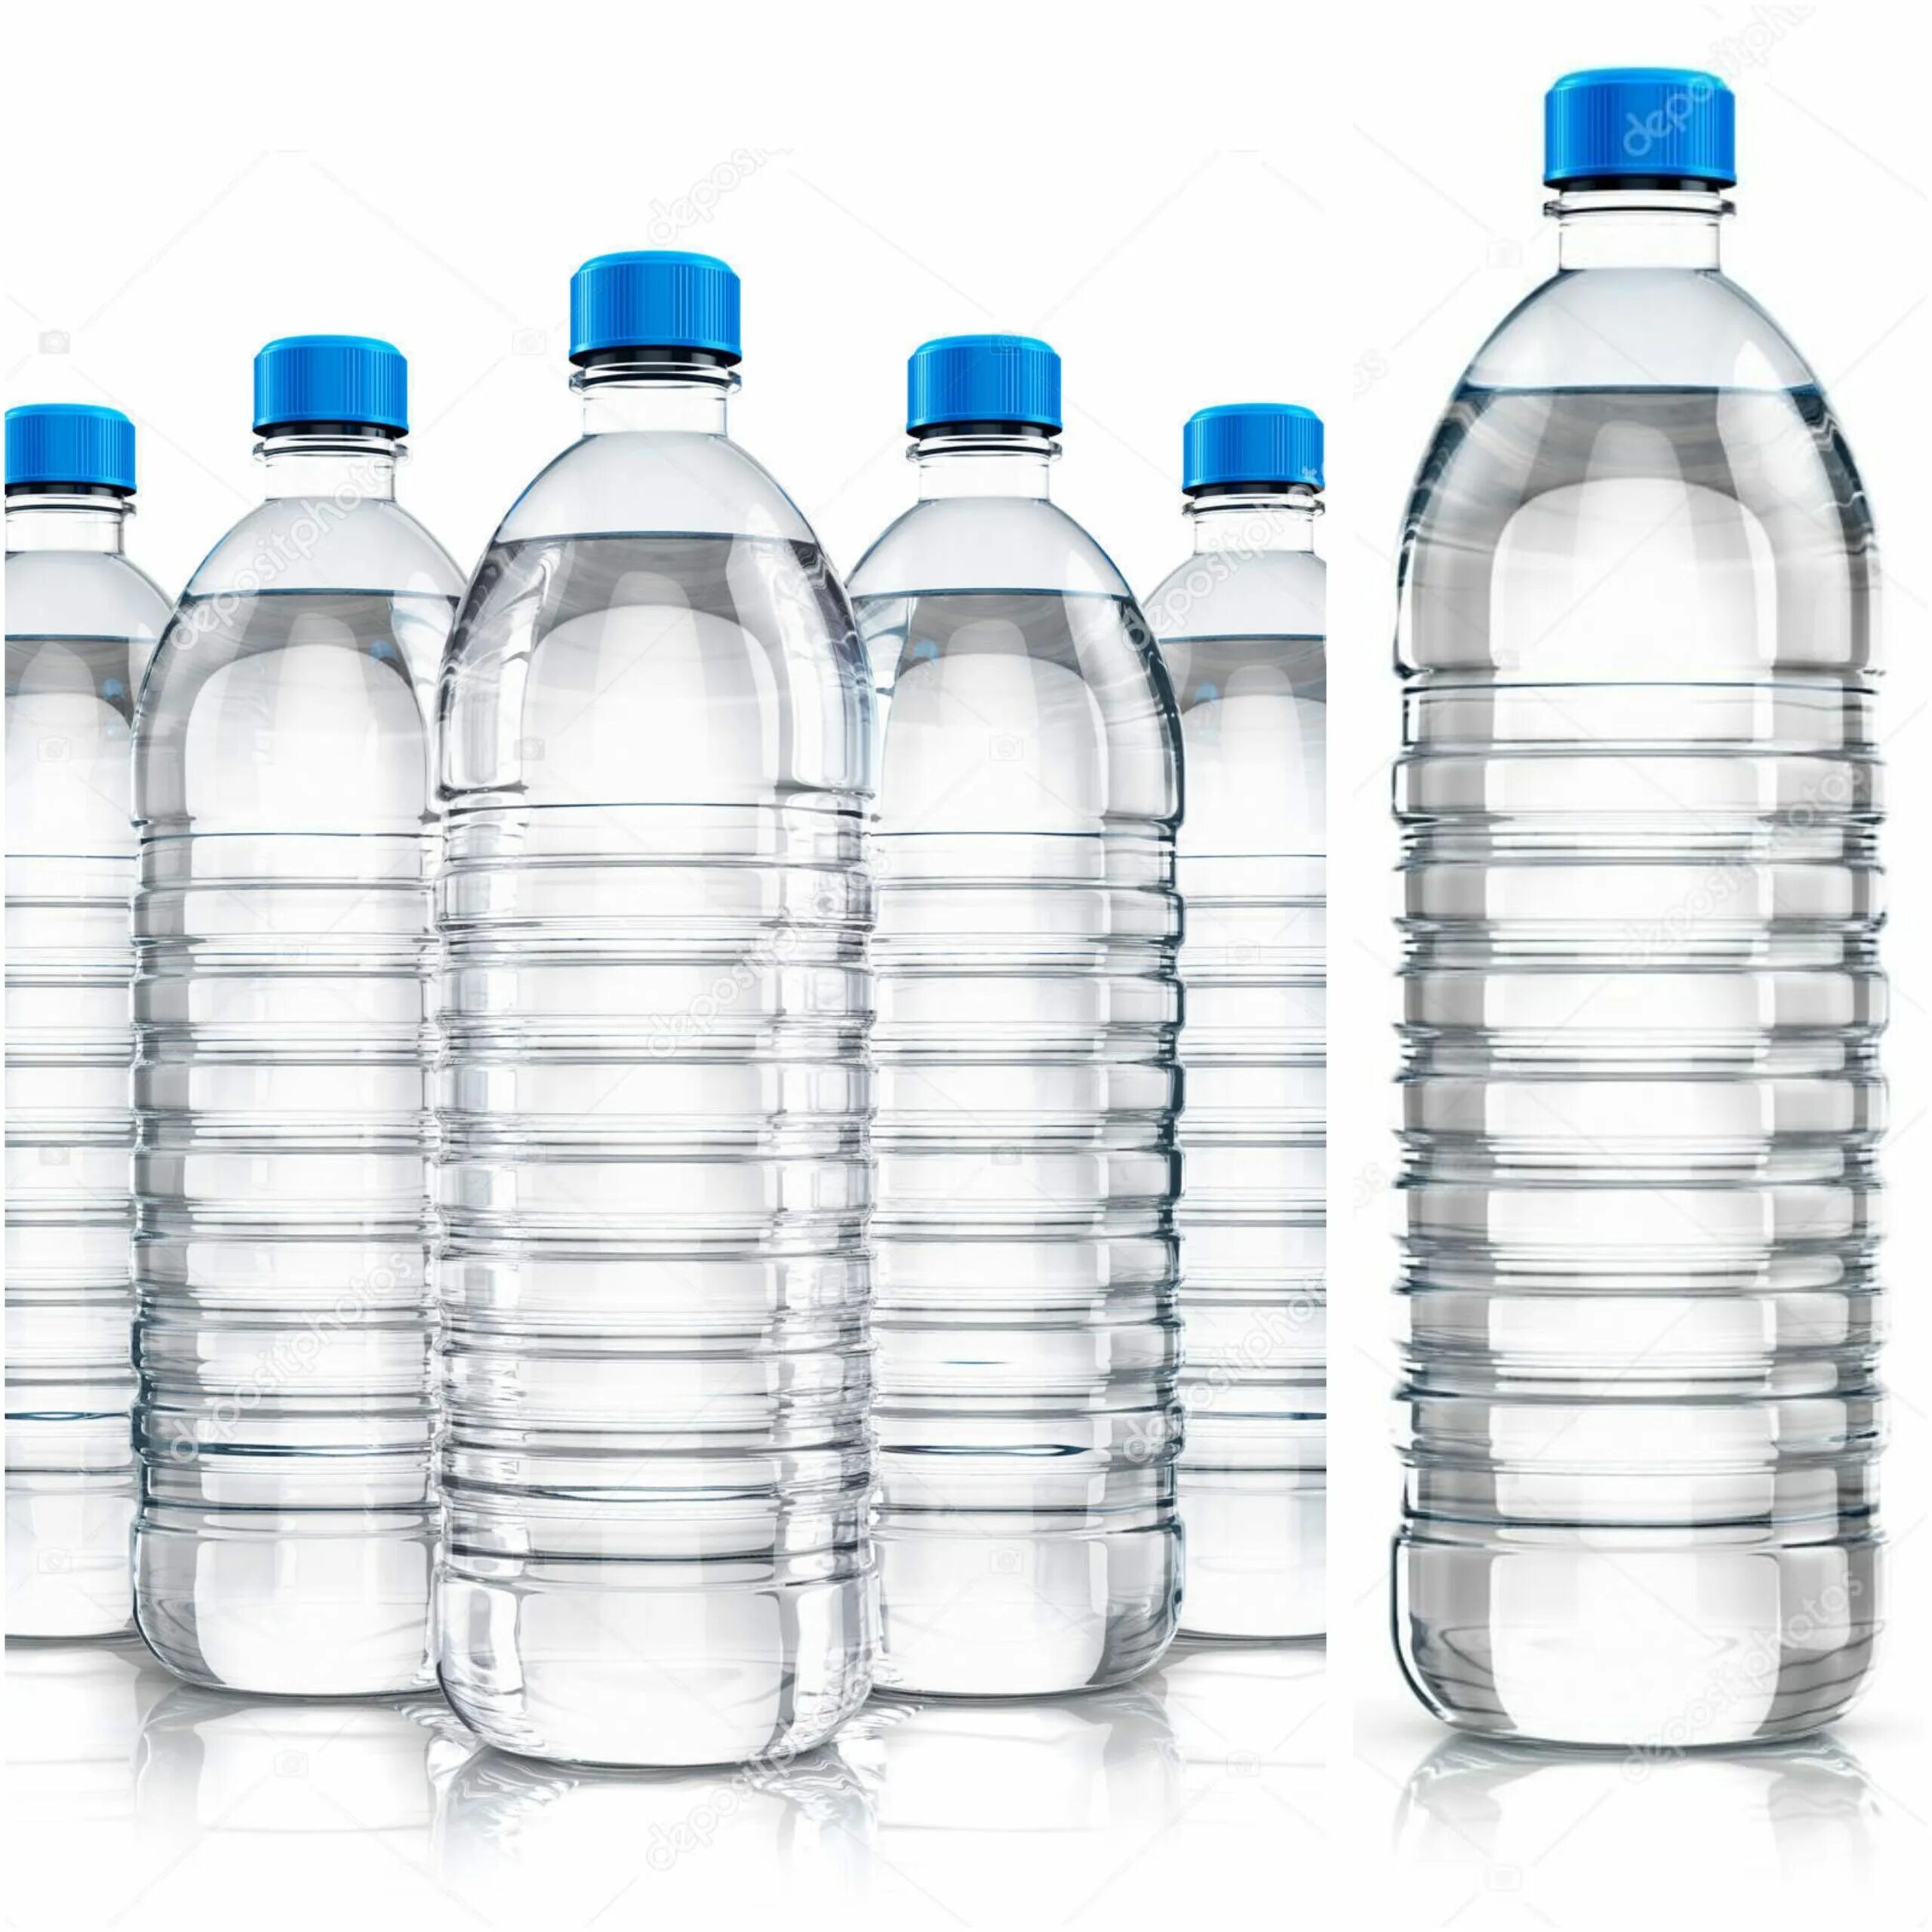 Форм концентрат. Бутылка для воды. Пластиковая бутылка для воды. Бутилированная вода. 1 Литра воды бутылка.